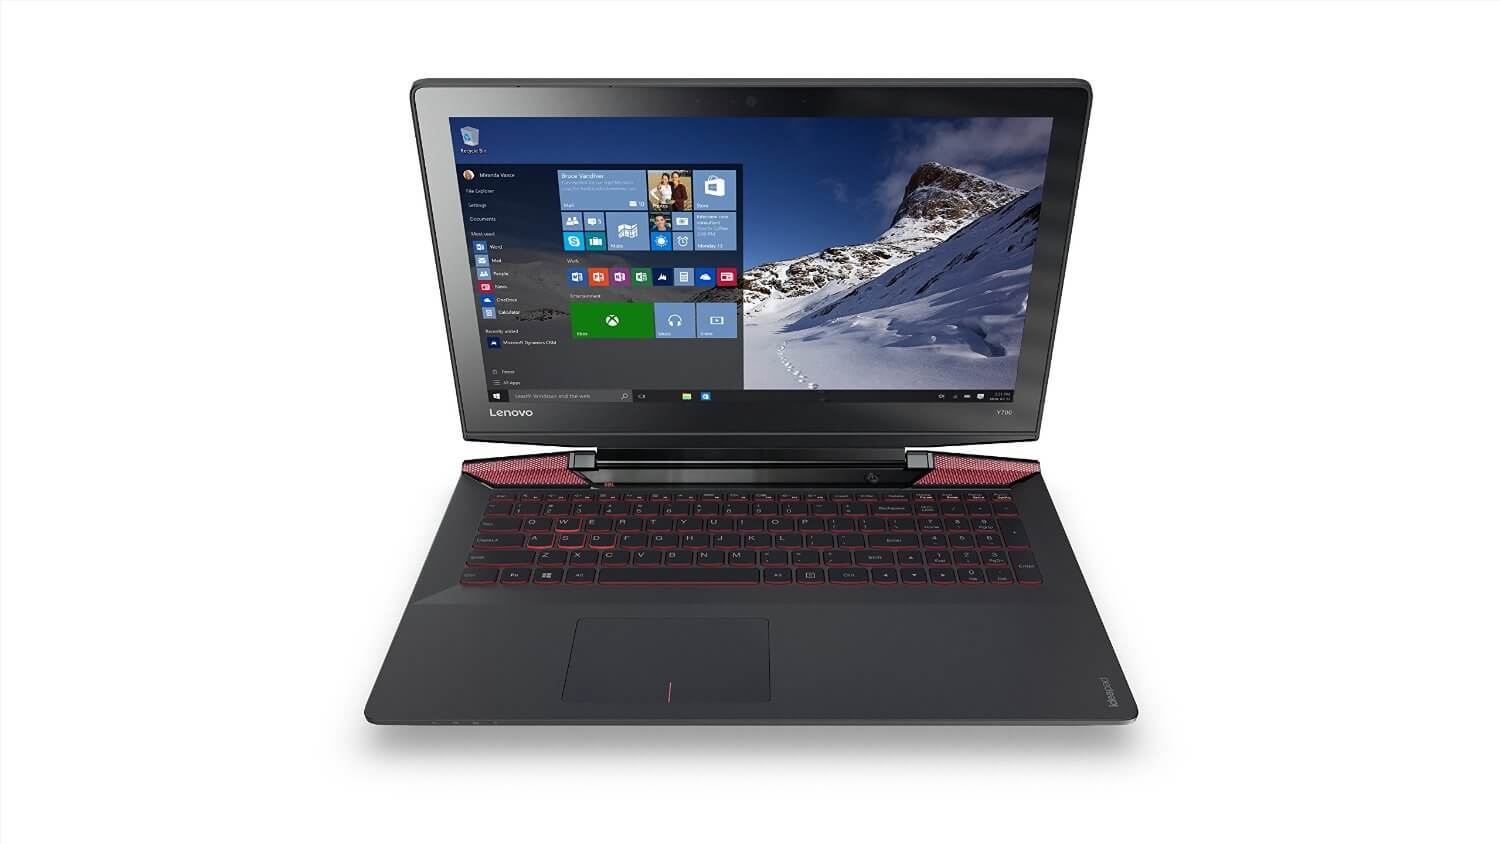 Lenovo Y700 80NV0028US Gaming Laptop Under 1500